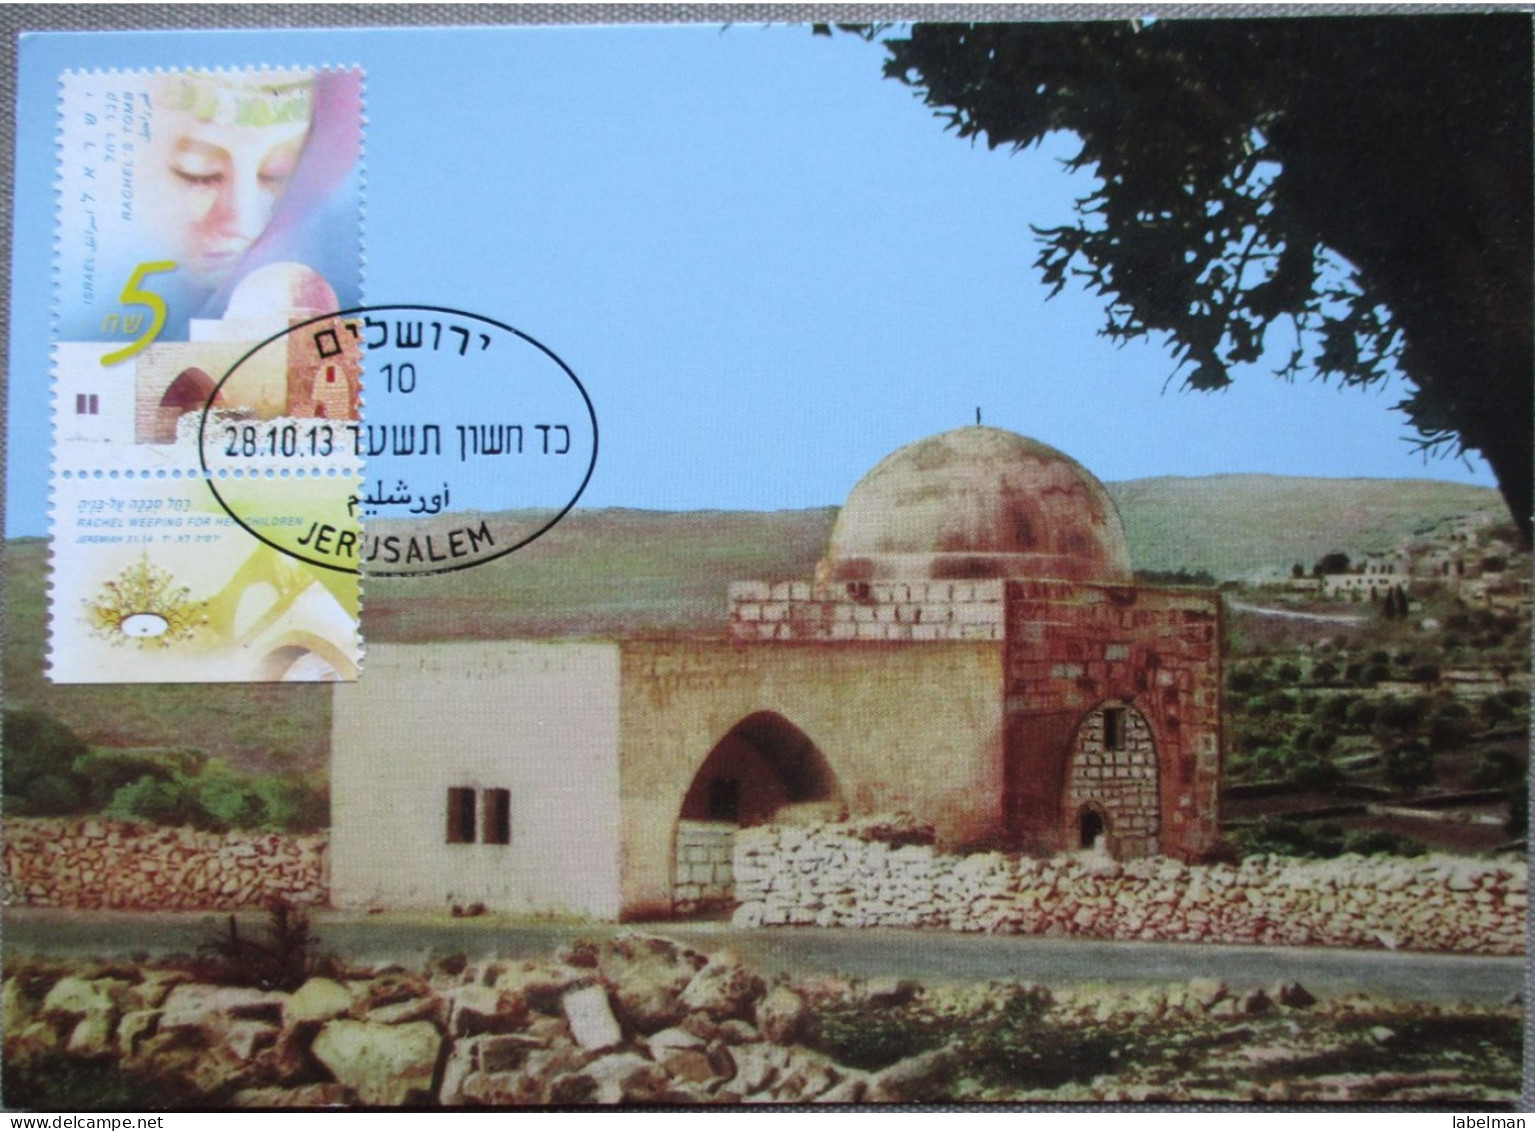 ISRAEL 2013 MAXIMUM CARD POSTCARD BETHLEHEM RACHEL TOMB FIRST DAY OF ISSUE CARTOLINA CARTE POSTALE POSTKARTE CARTOLINA - Maximum Cards